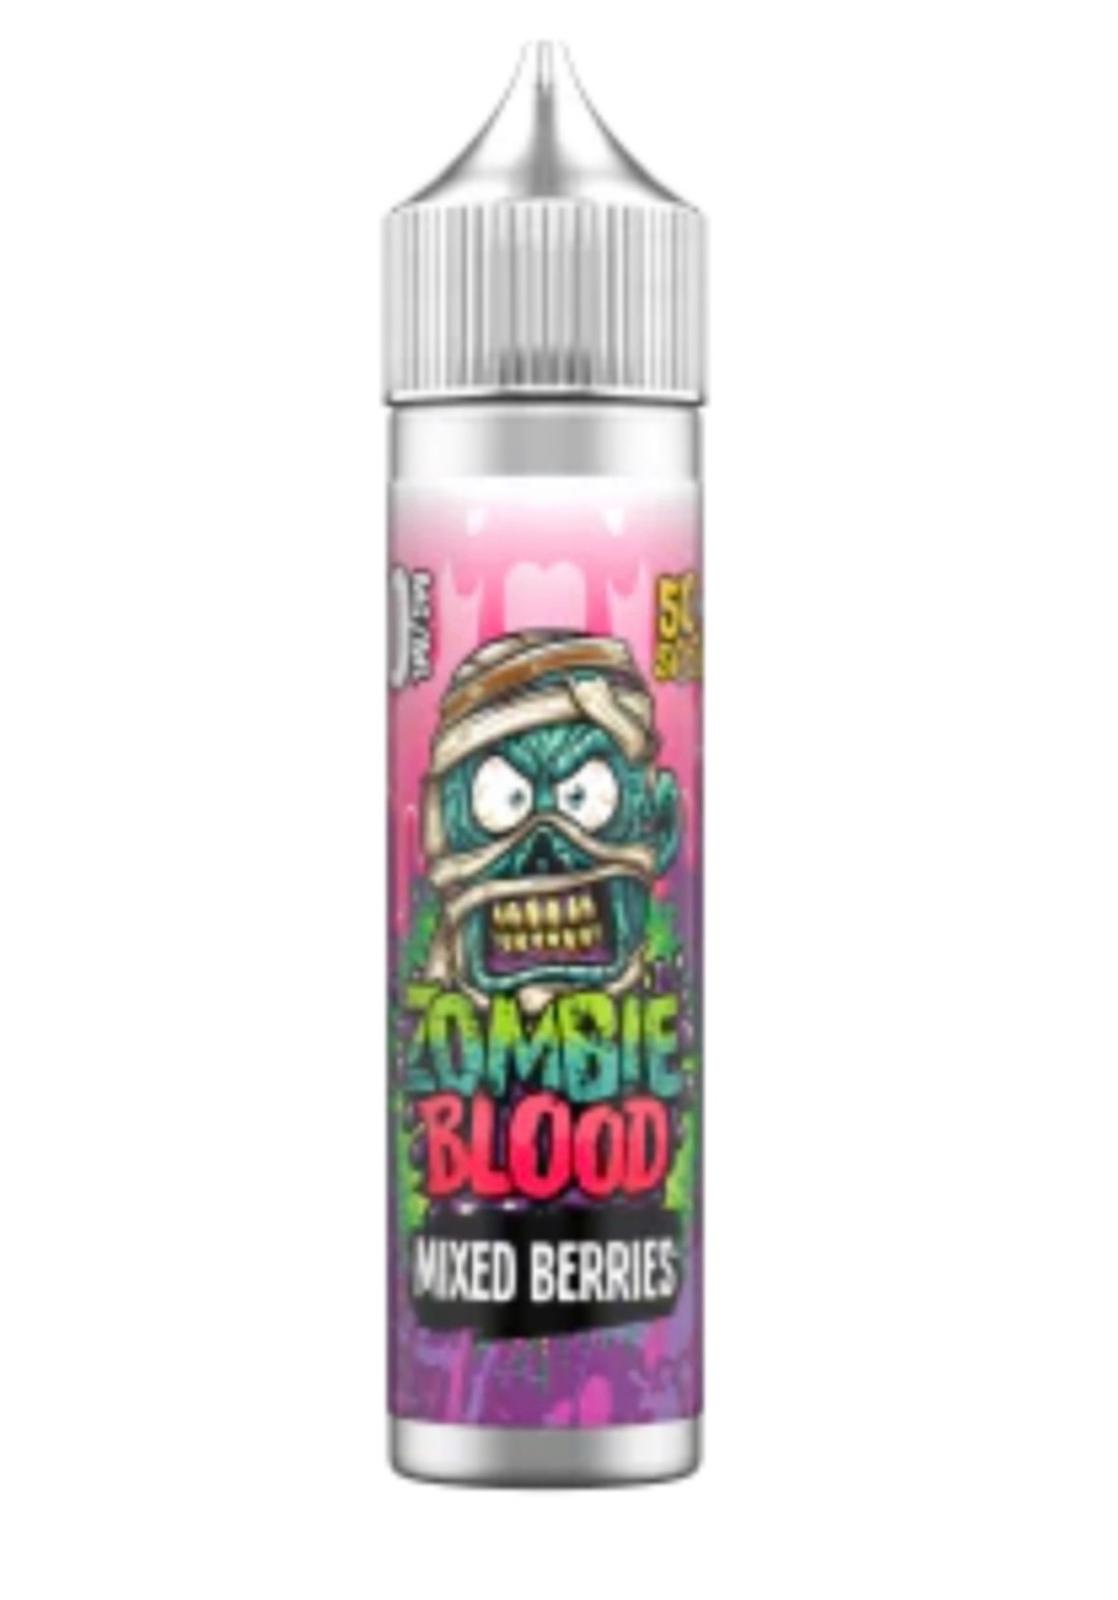 Mixed Berries Zombie Blood E-liquid 50ml Shortfill